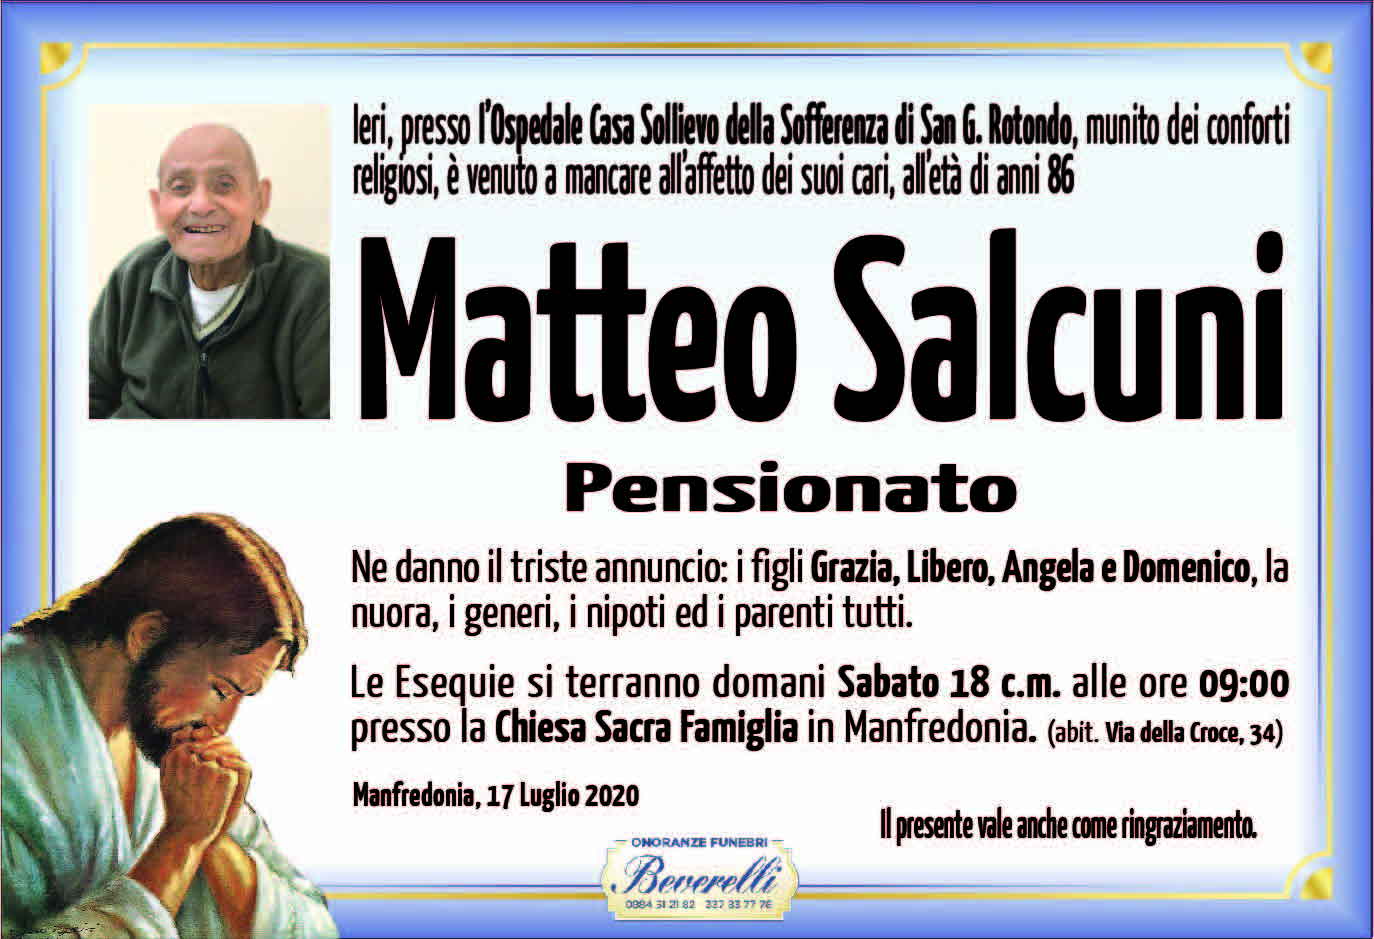 Matteo Salcuni